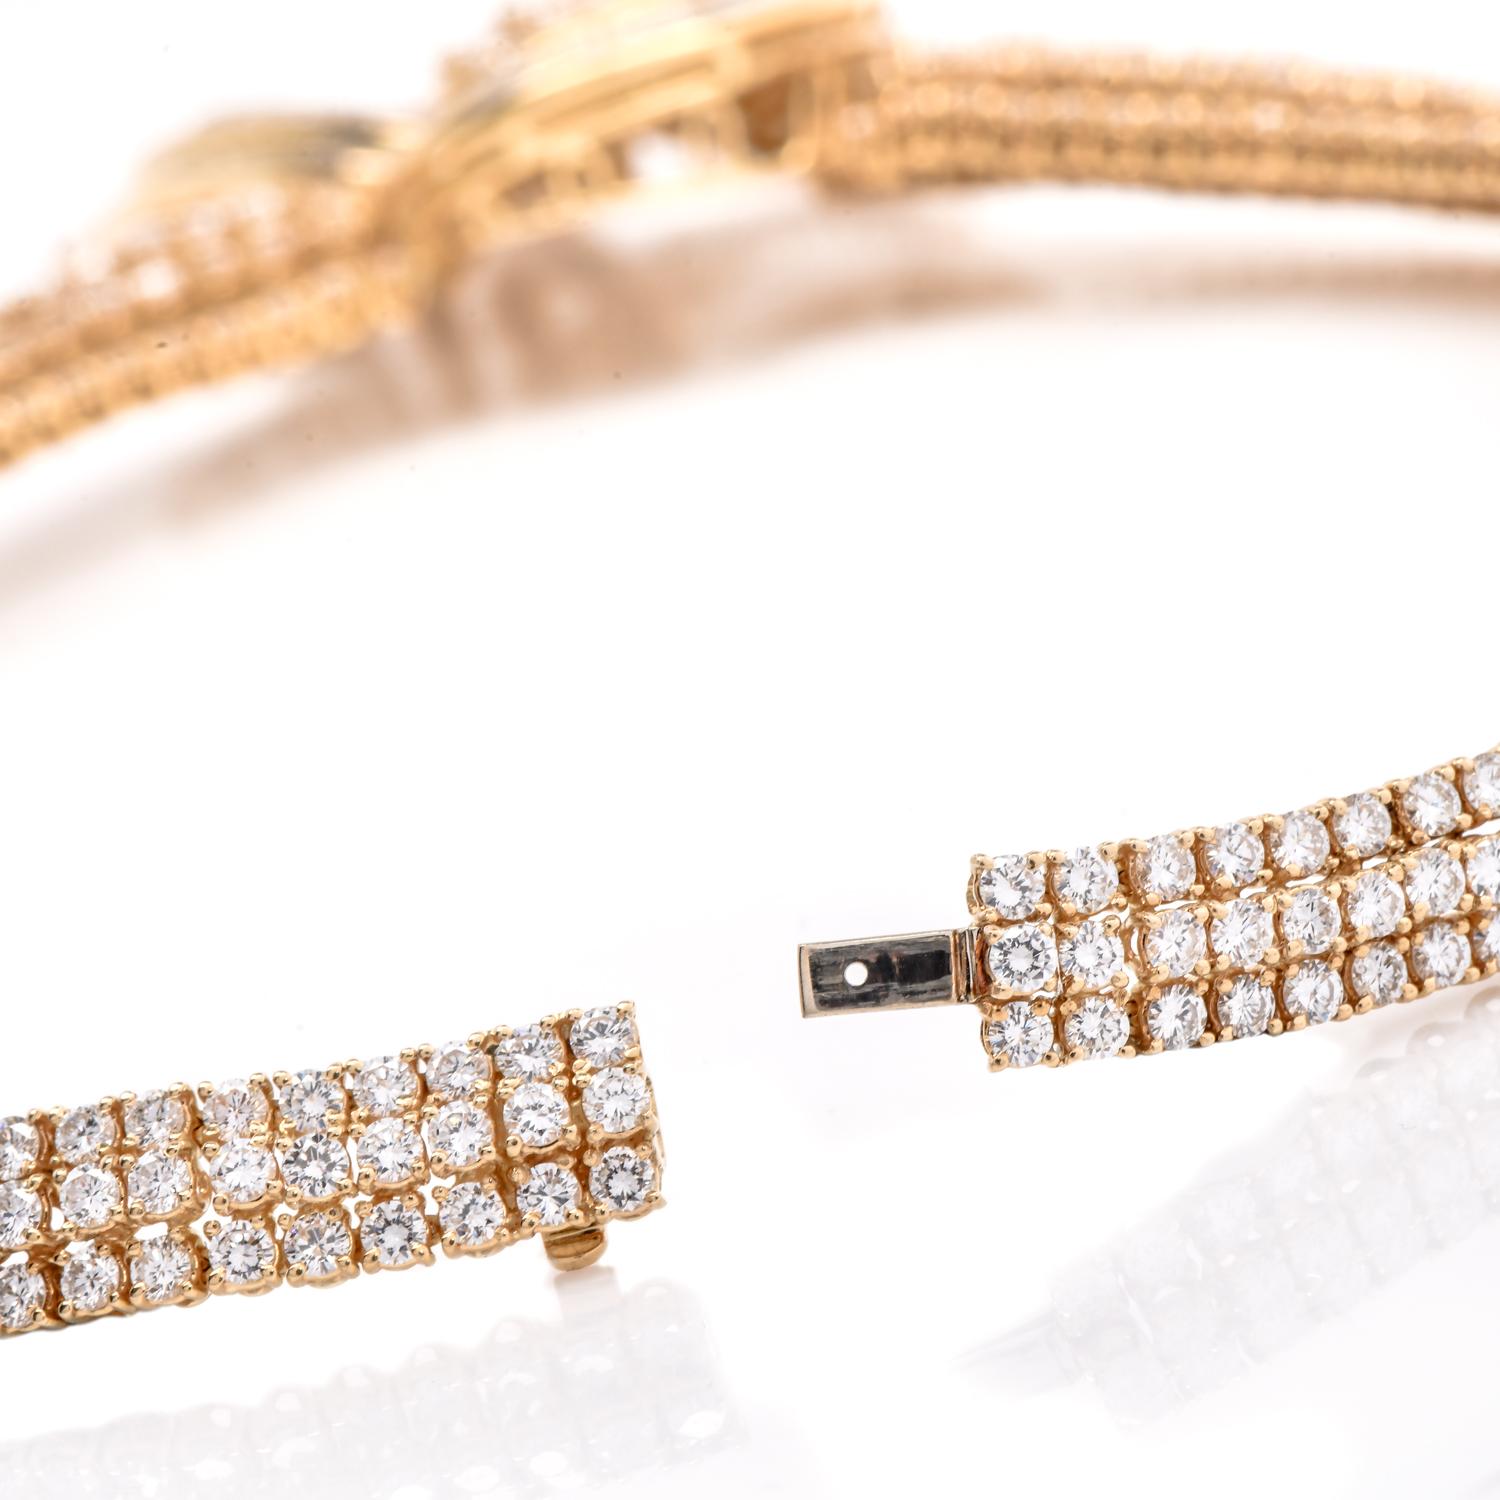  Capri 122.50 carats Diamond Scarf Knot 18K Statement Necklace  In Excellent Condition For Sale In Miami, FL